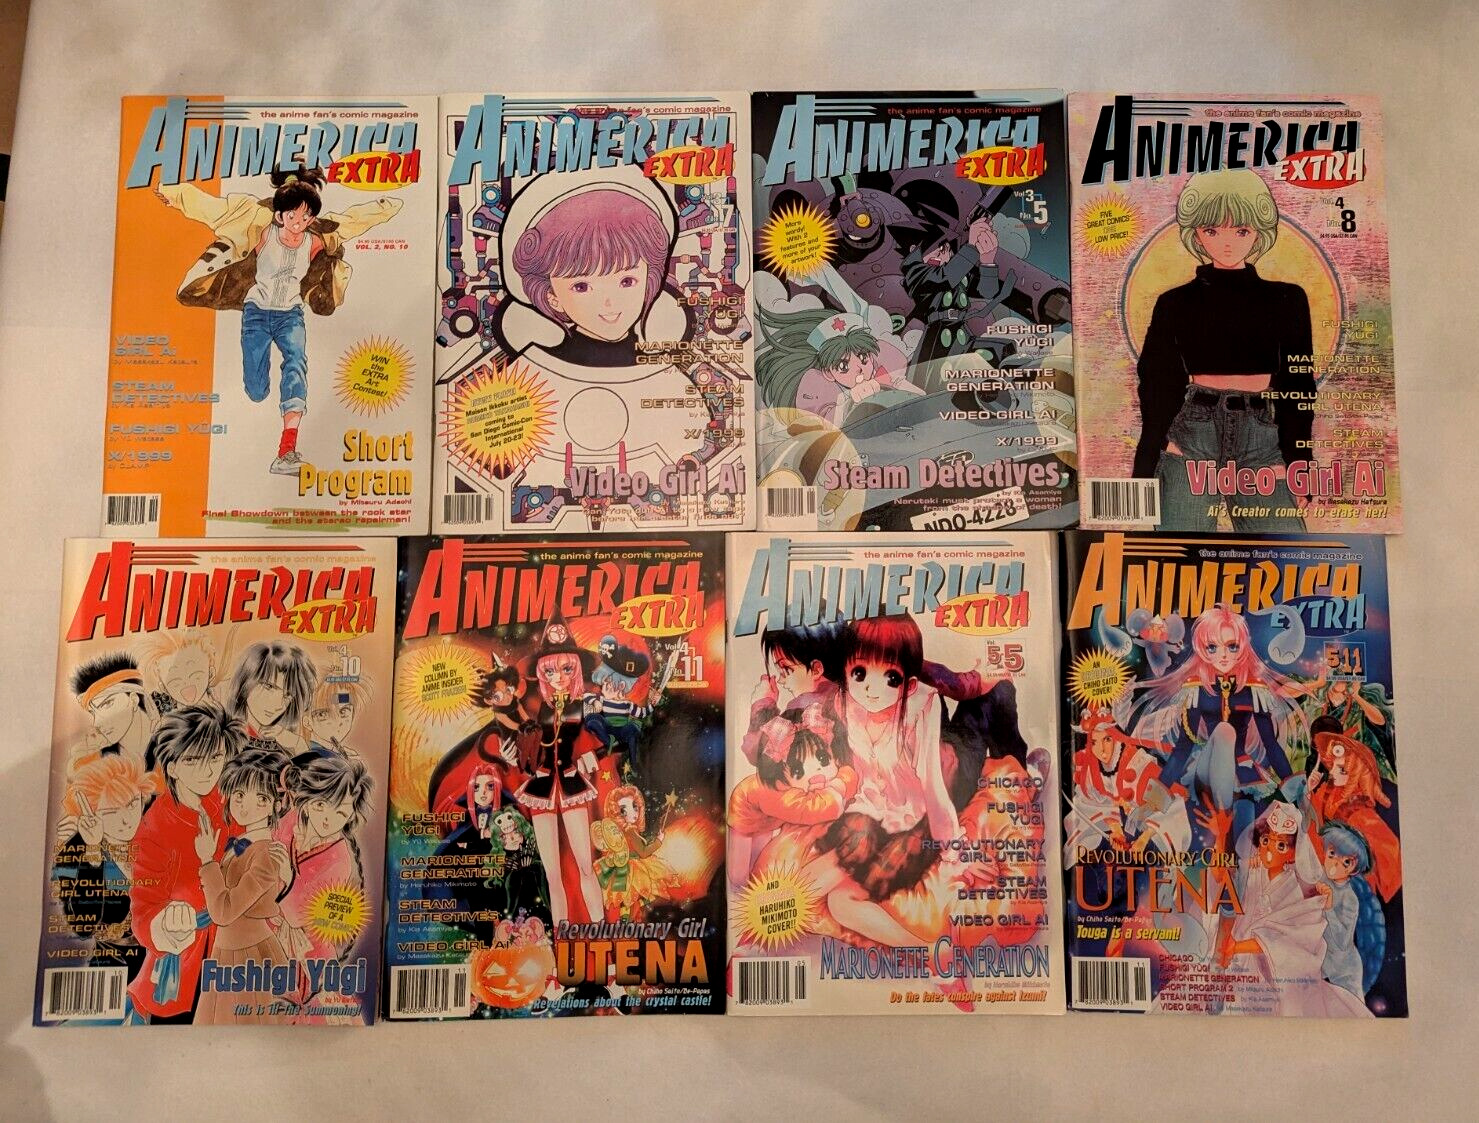 8 Animerica Extra, mixed volumes 2-5